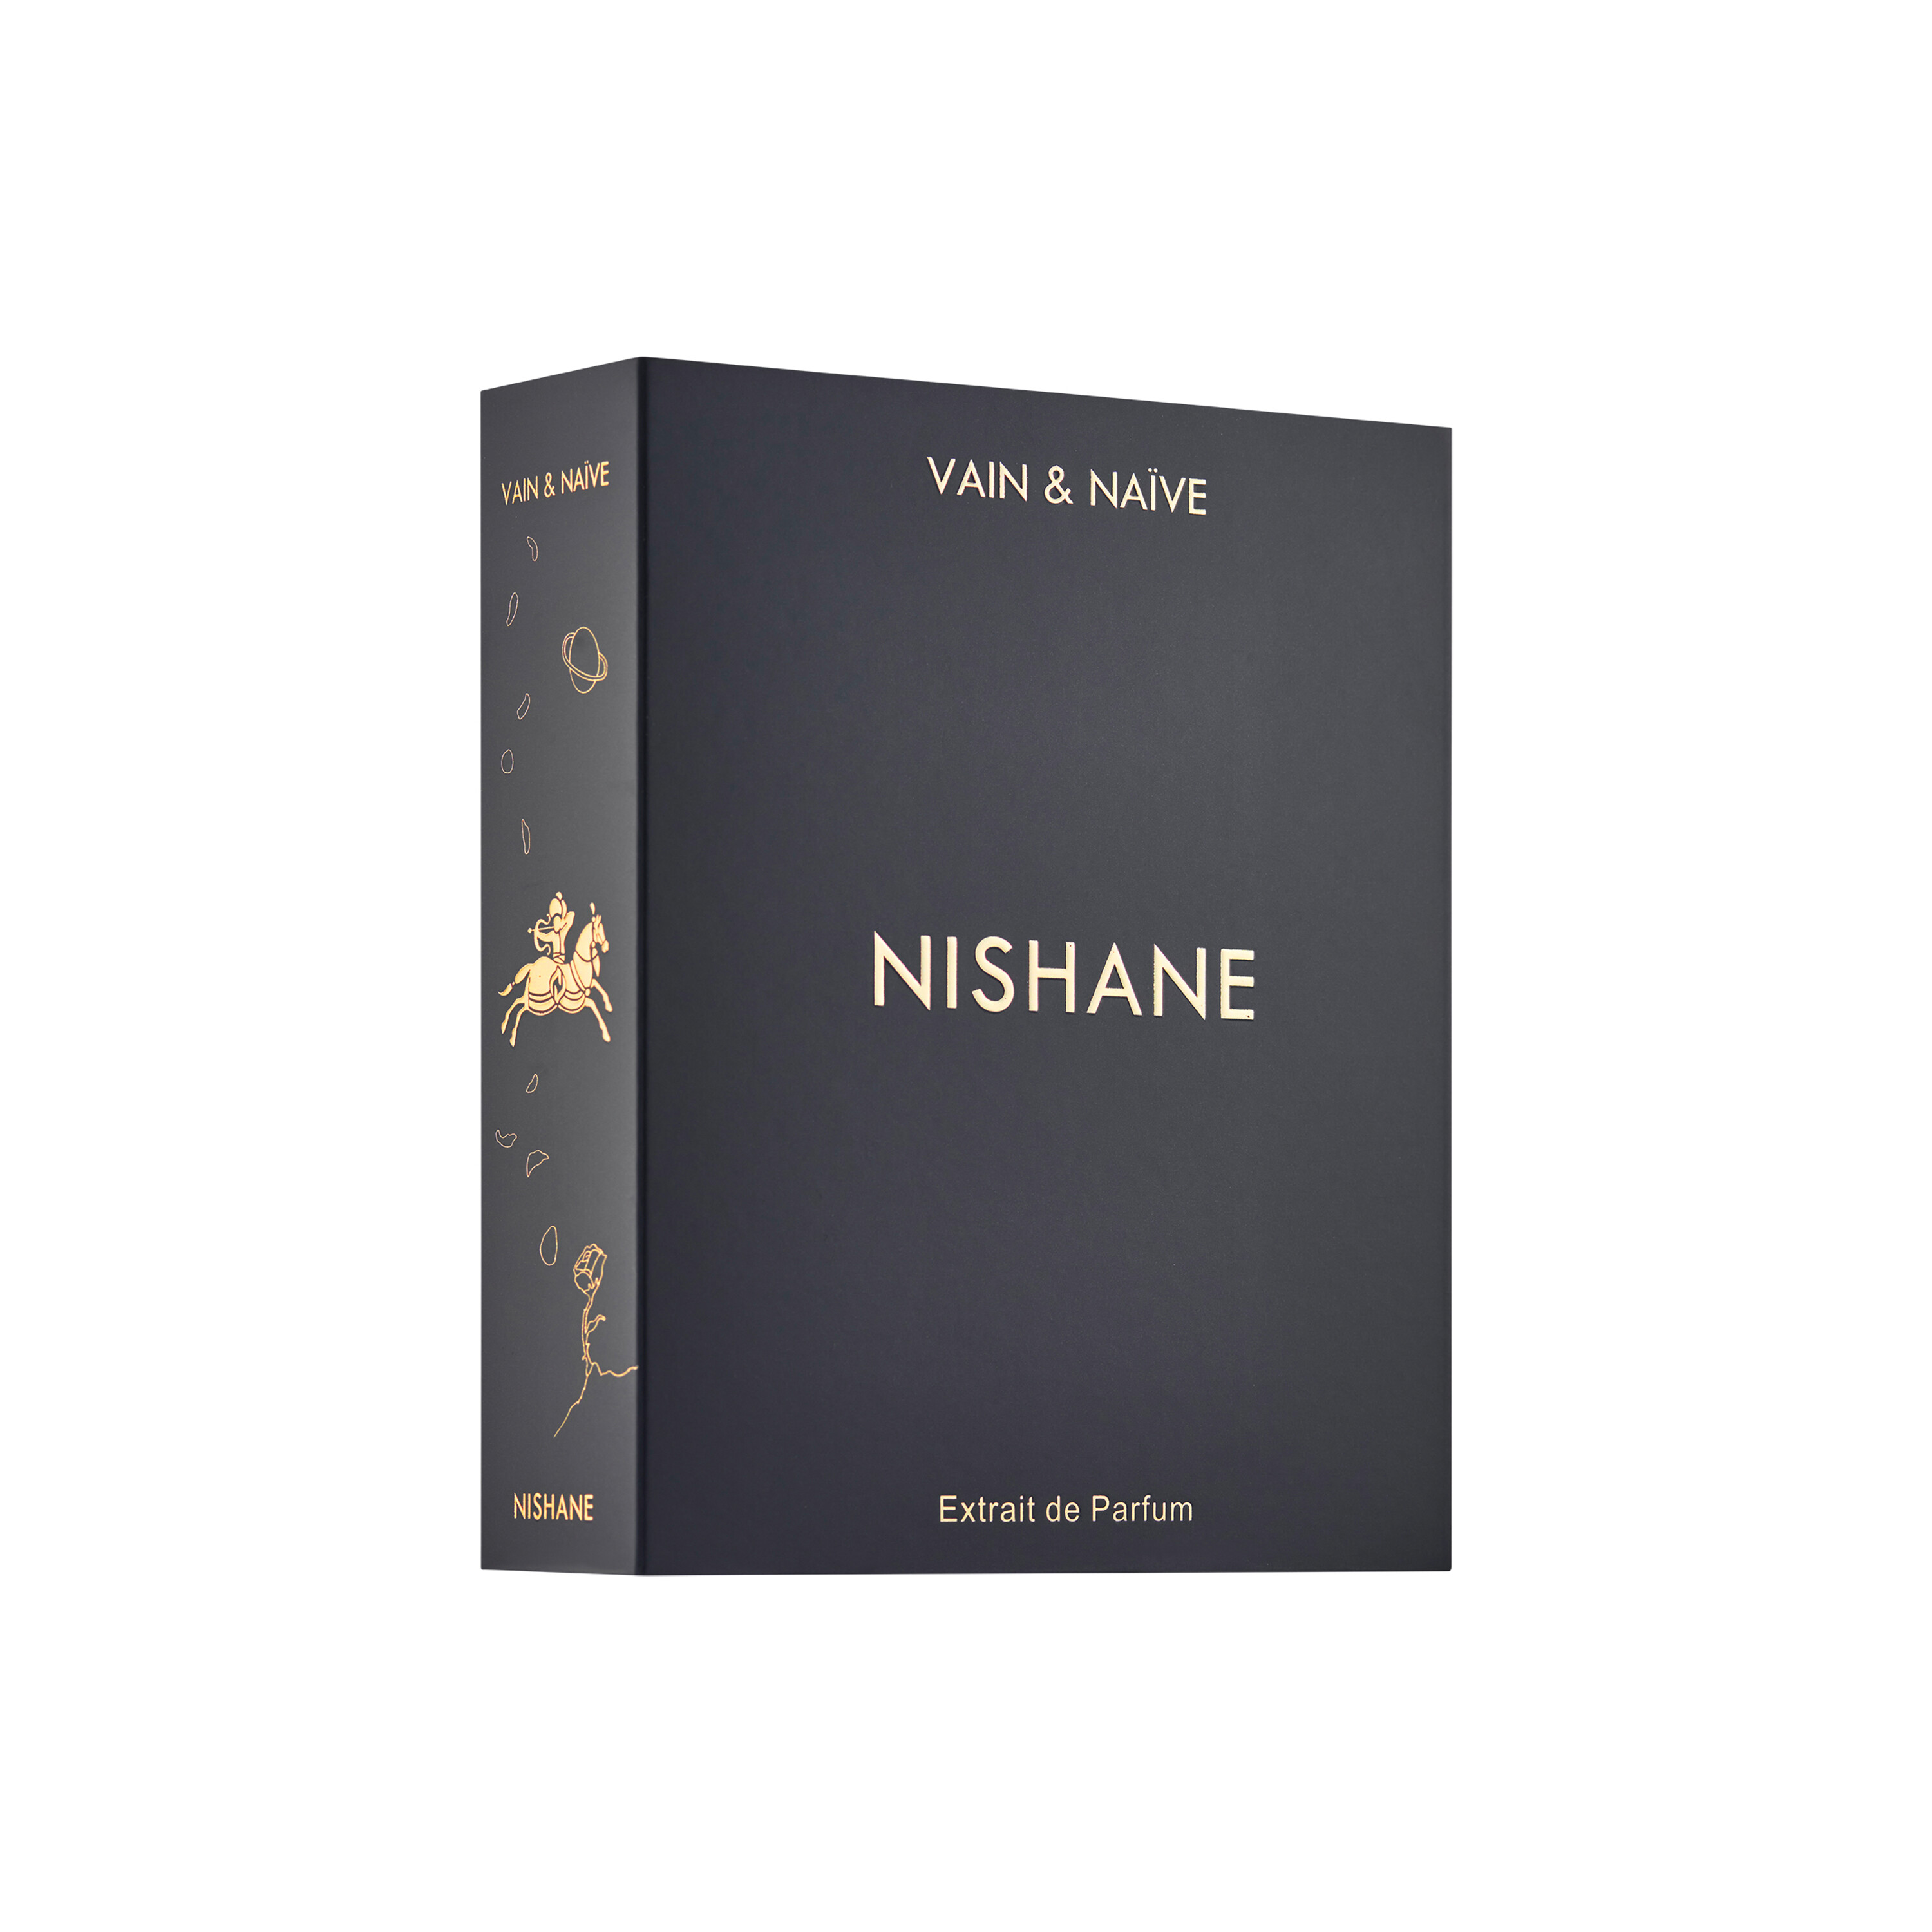 NISHANE Vain & Naive Extrait de Parfum 50ml